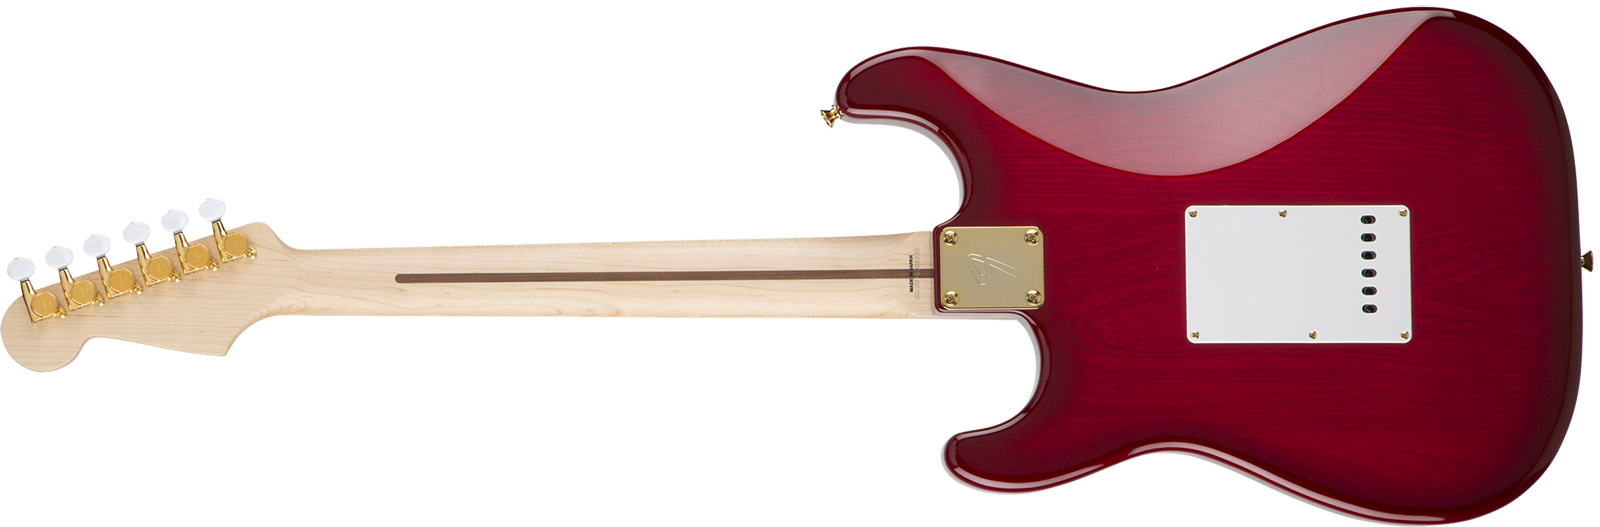 Fender Richie Kotzen Strat Japan Ltd 3s Mn - Transparent Red Burst - Guitare Électrique Forme Str - Variation 4